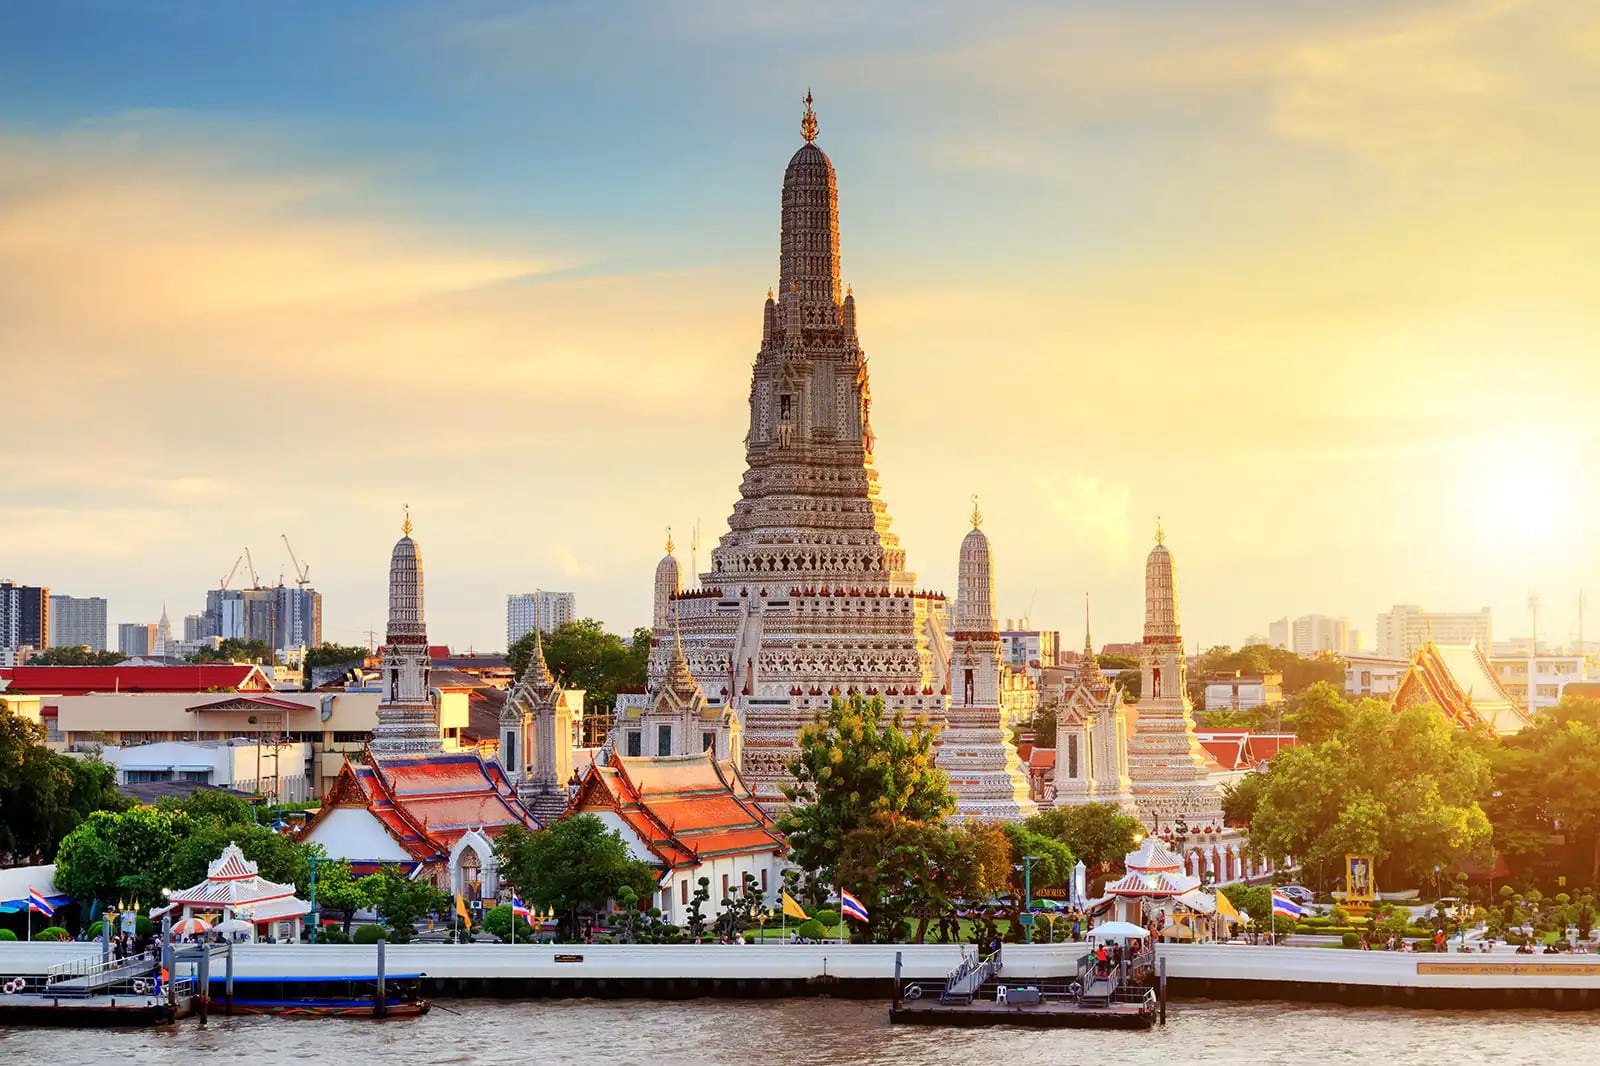 The Wat Arun Temple in Bangkok